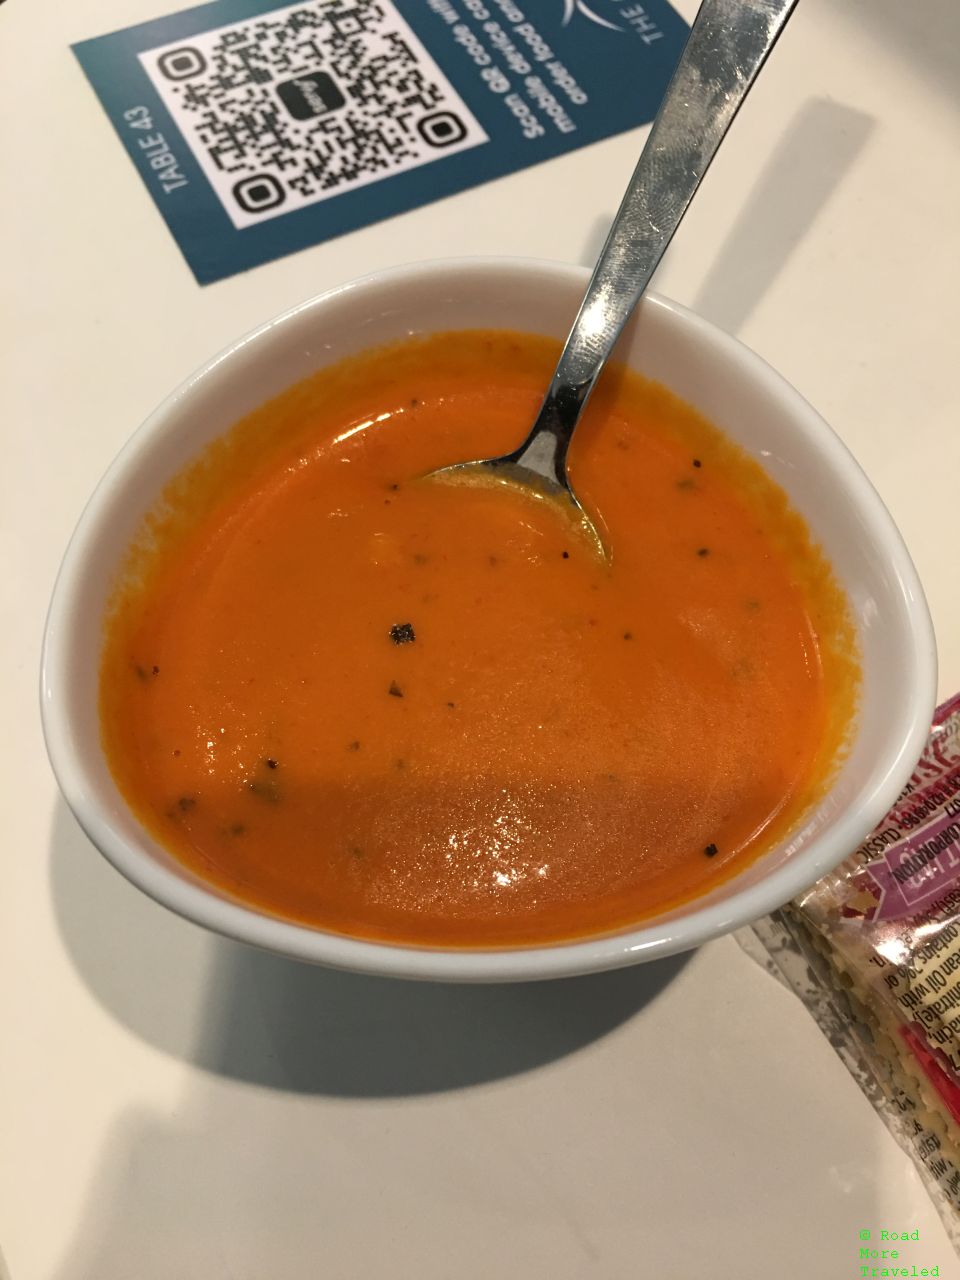 The Club tomato basil soup